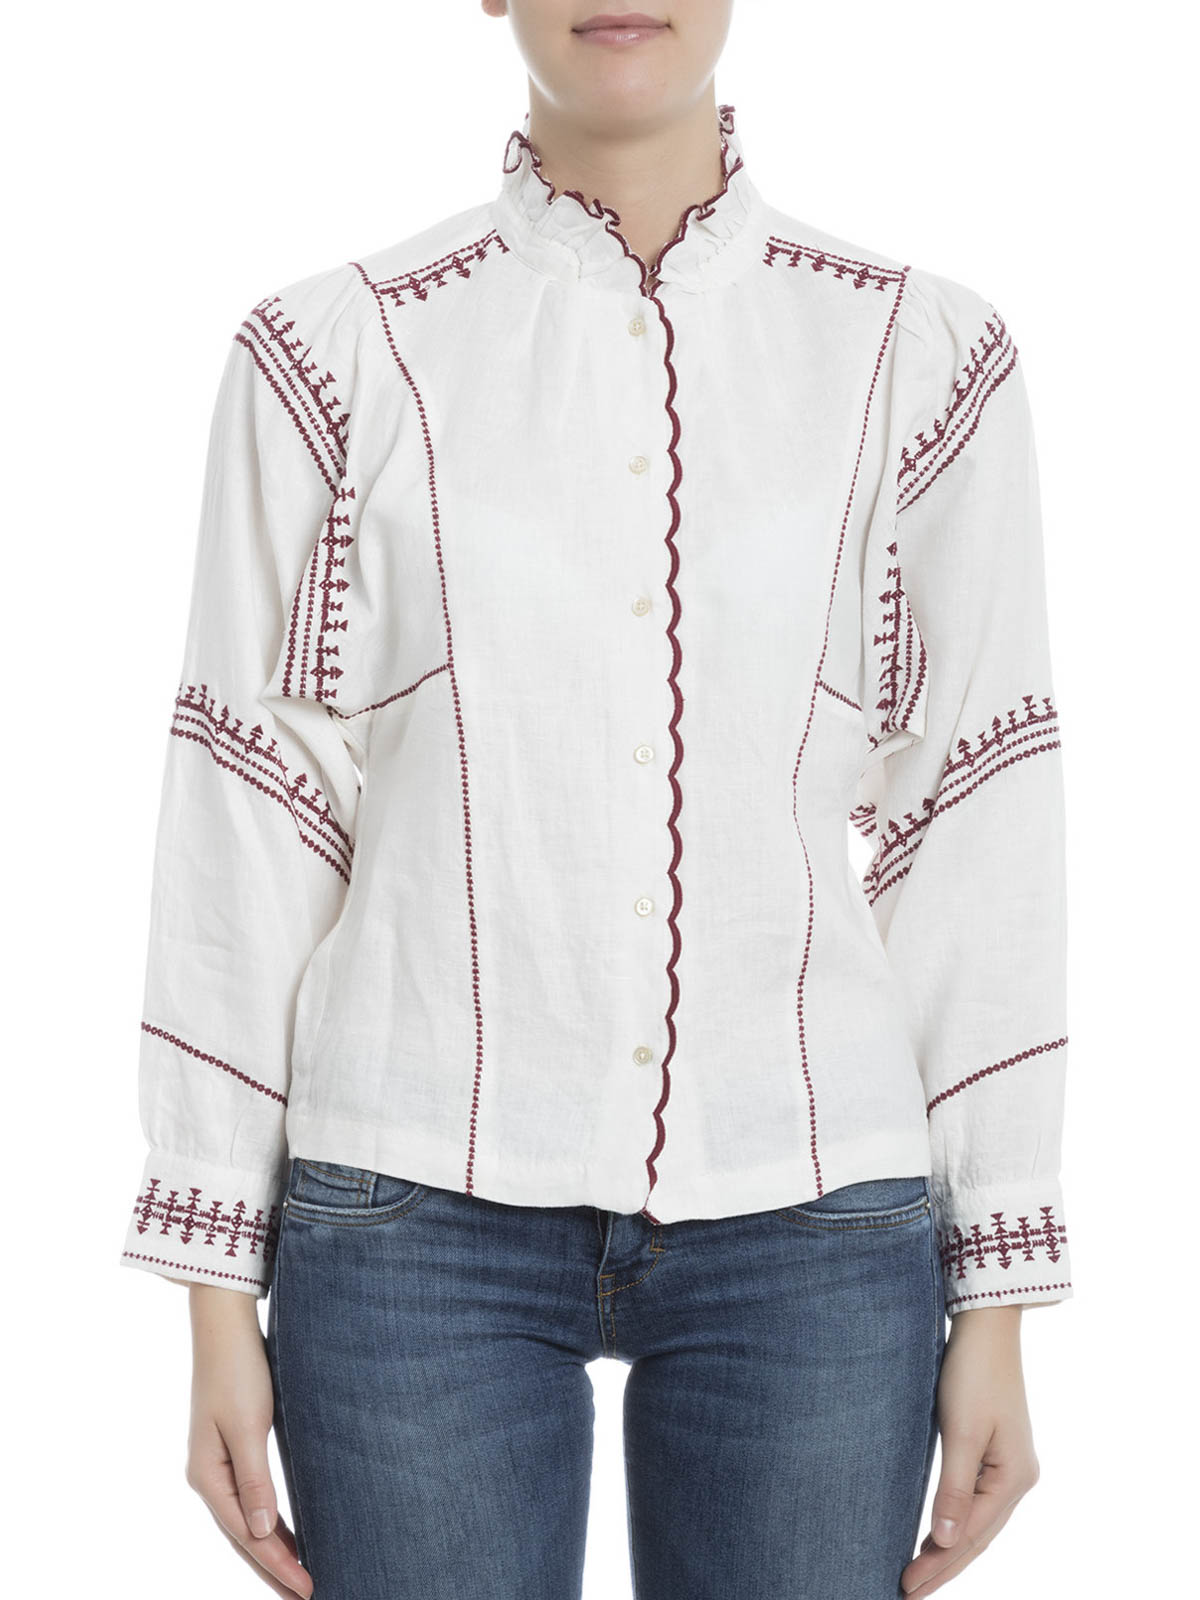 Arthur spand Beskrive Shirts isabel marant etoile - Delphine embroidered linen blouse -  HT093217P024E23EC